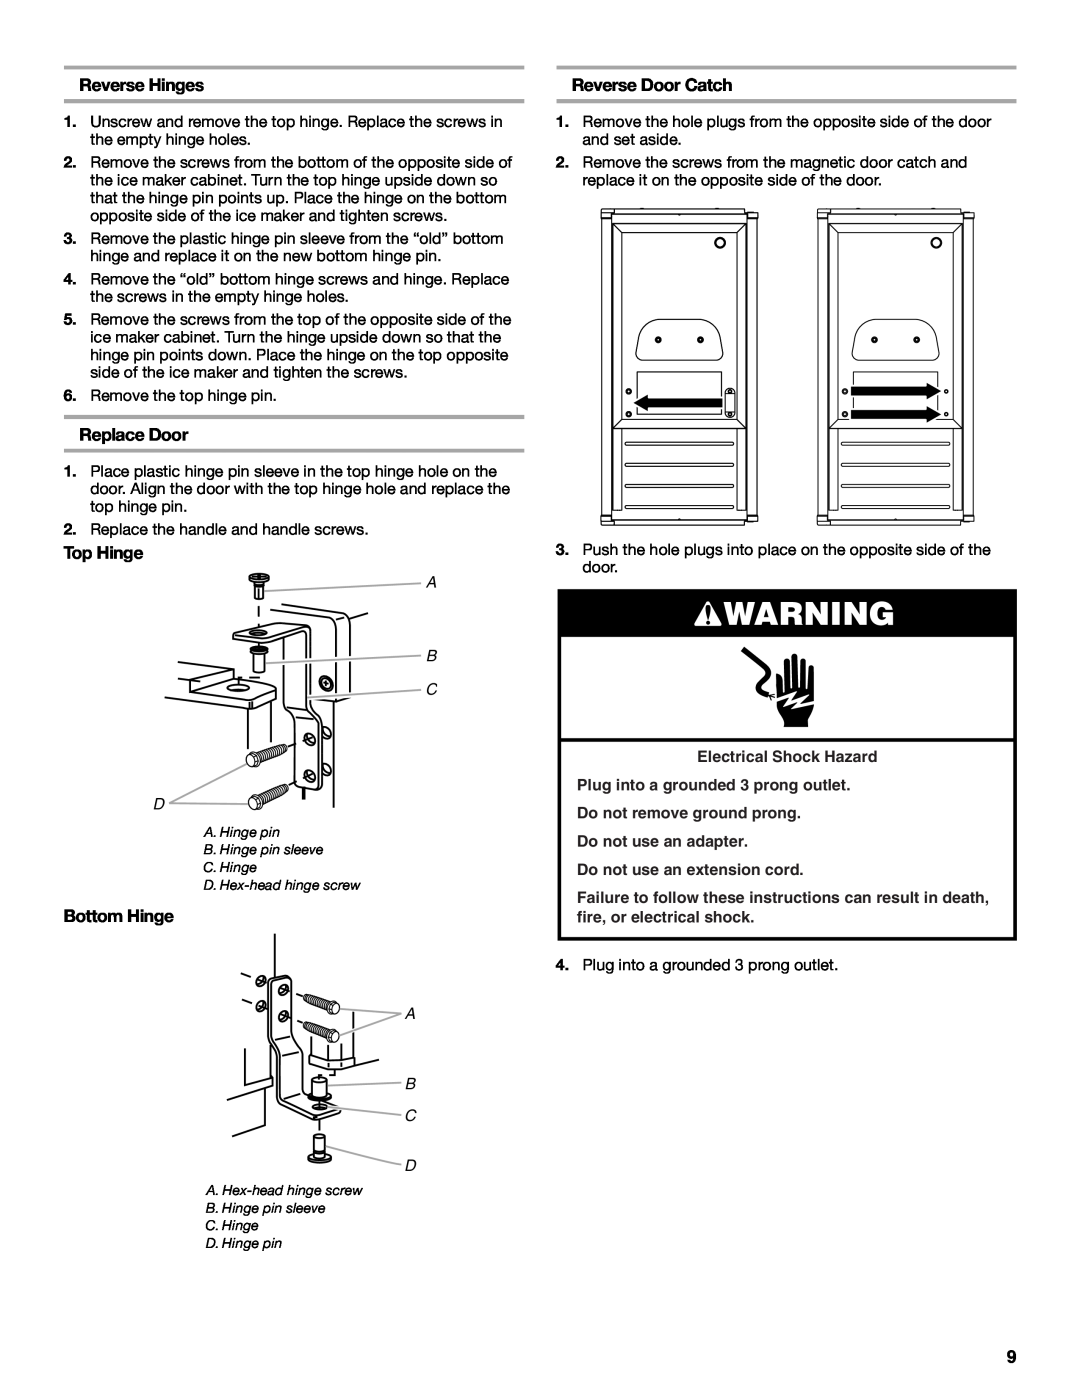 Whirlpool W10206421B manual Reverse Hinges, Replace Door, Top Hinge, Bottom Hinge, Reverse Door Catch, A B C D 